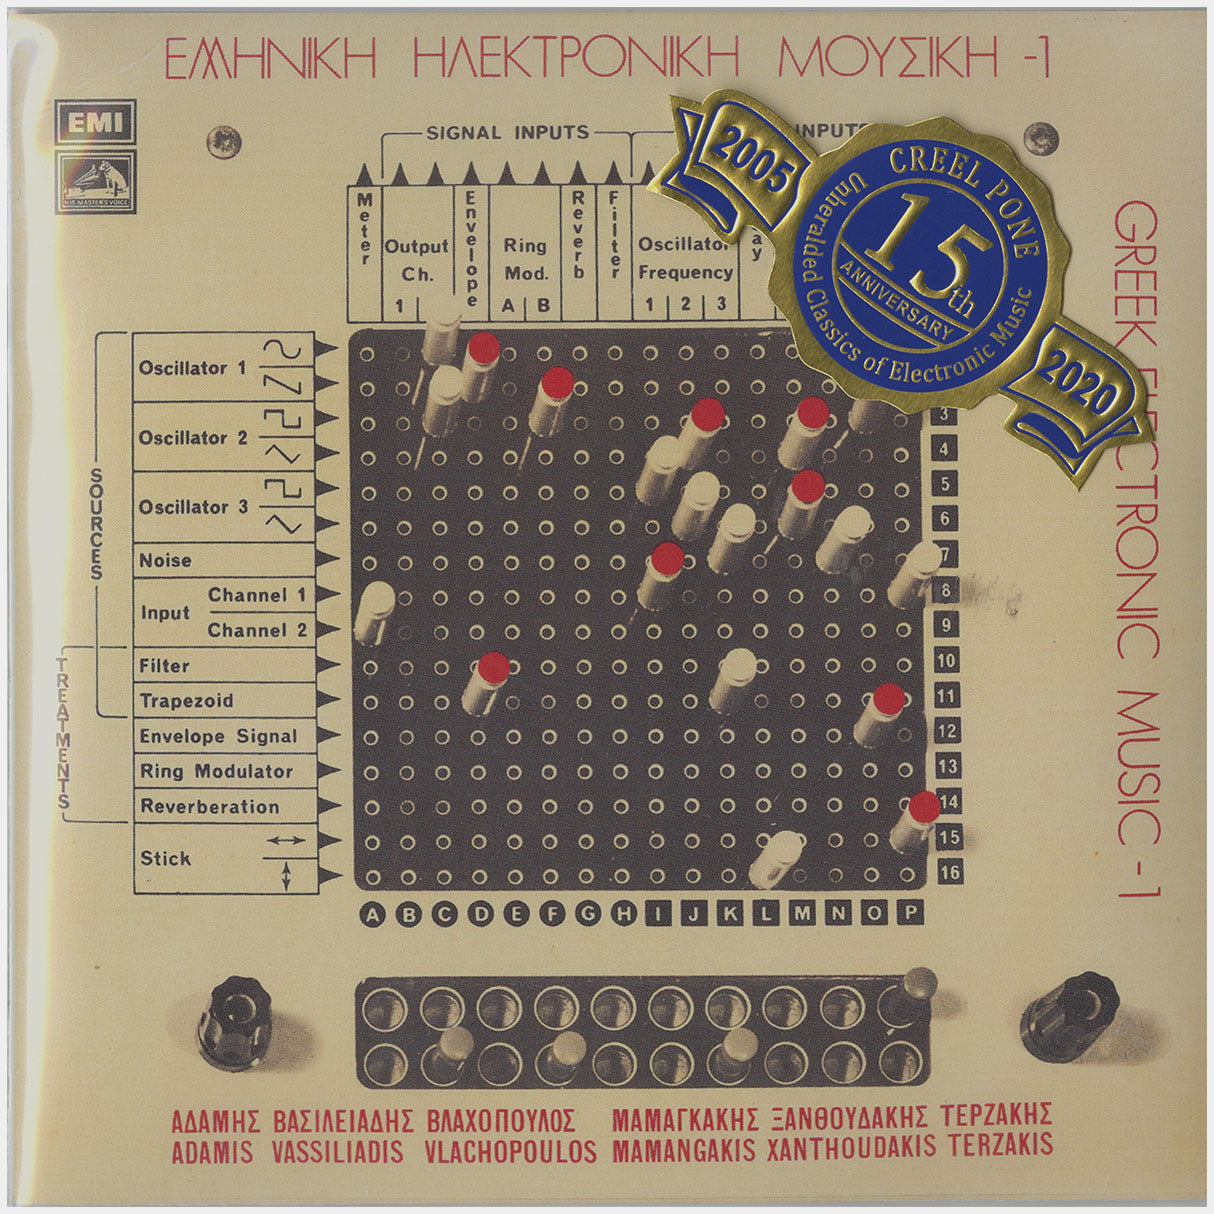 [CP 034-144 CD] Greek Electronic Music - 1, Ελληνική Ηλεκτρονική Μουσική - 1, Works of Electronic Music, Εταιρία Νέας Μουσικής+